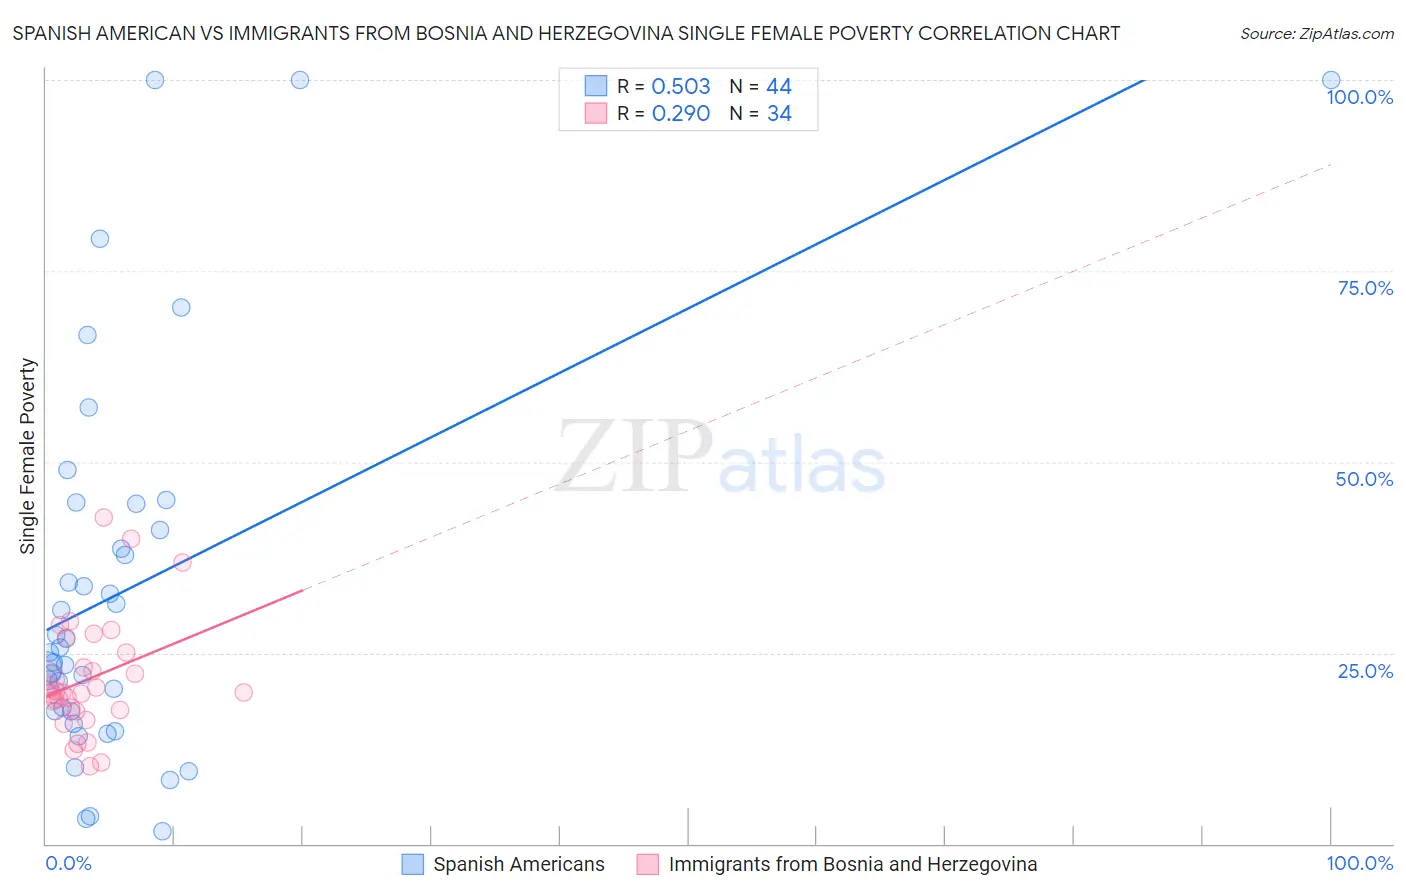 Spanish American vs Immigrants from Bosnia and Herzegovina Single Female Poverty